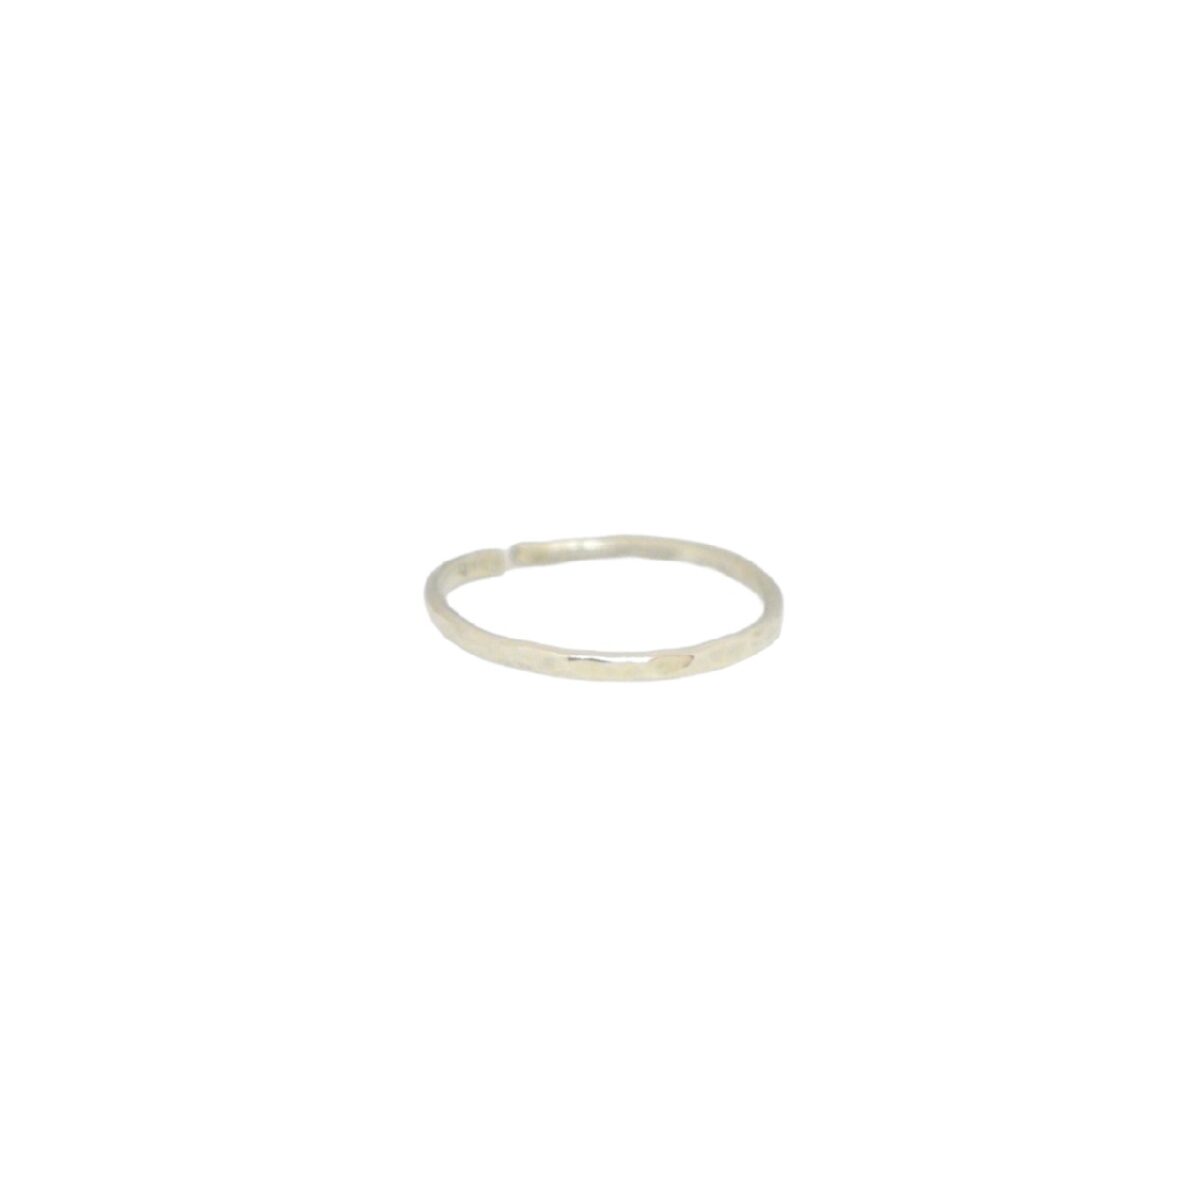 “Afi” ασημένιο δαχτυλίδι “Afi” ασημένιο δαχτυλίδι “Afi” ασημένιο δαχτυλίδι 4